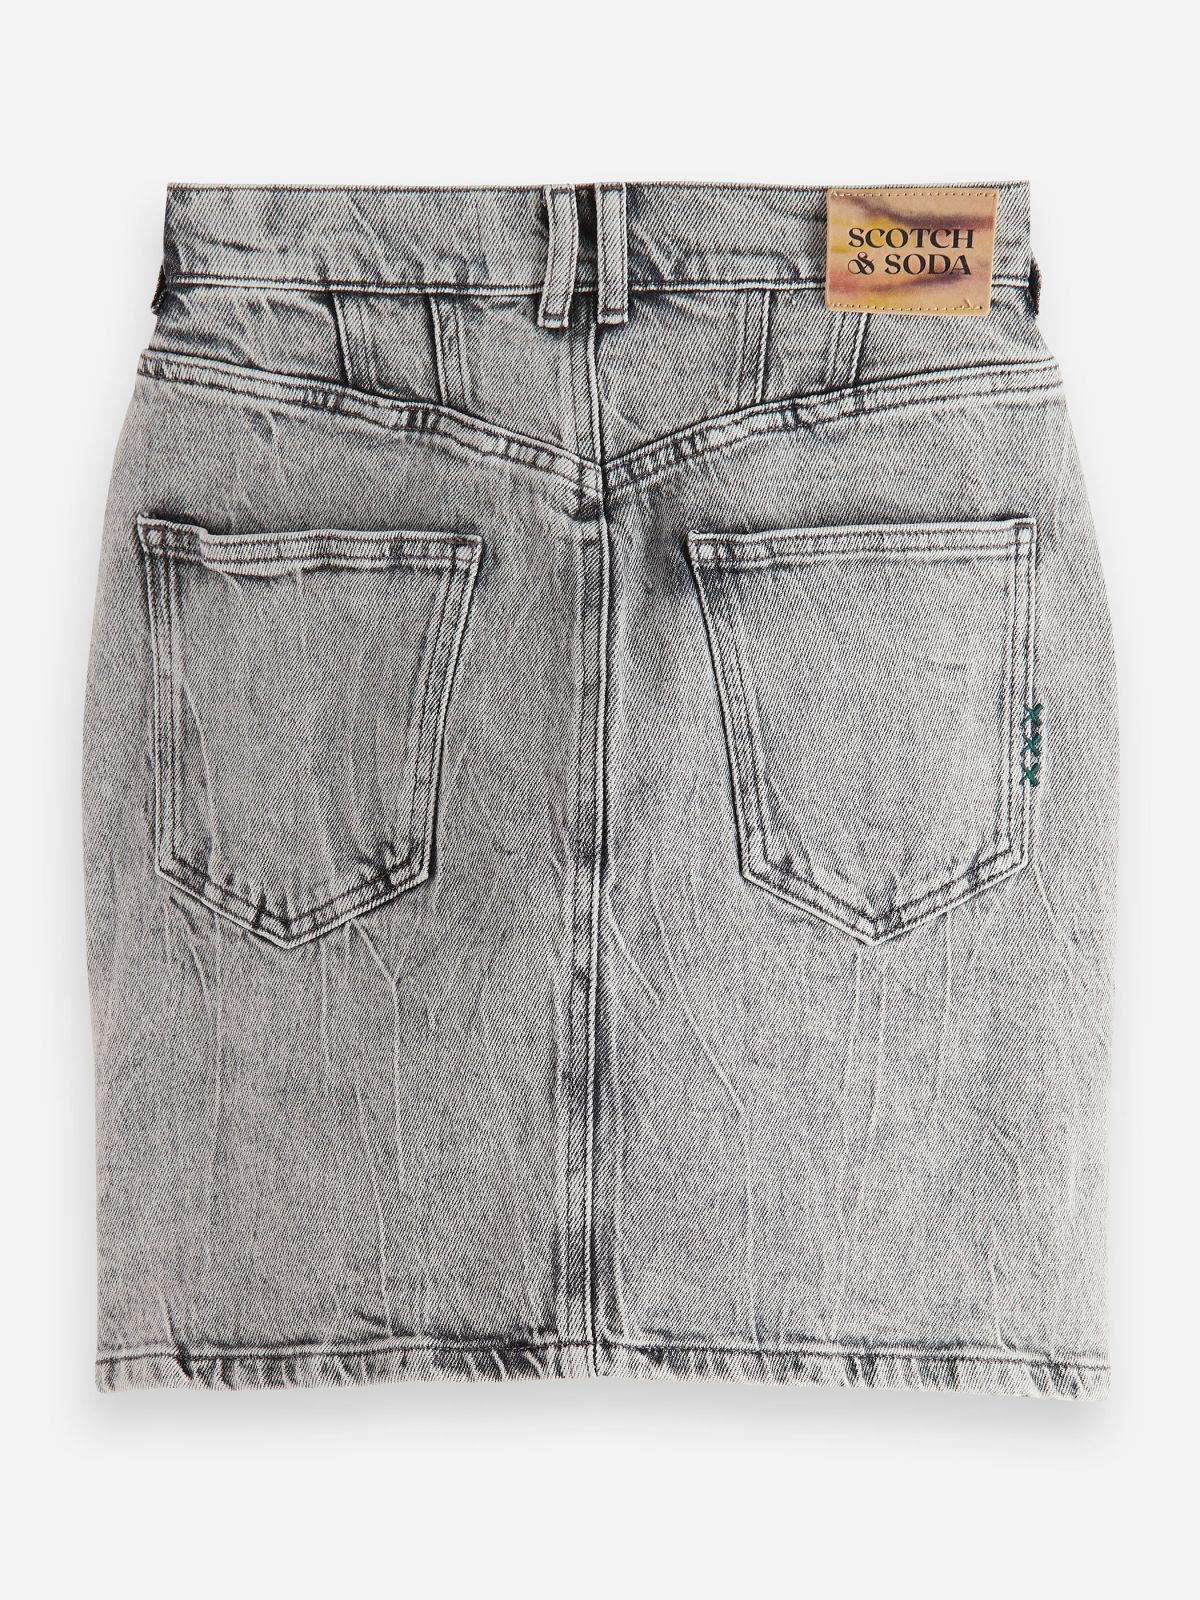  חצאית מיני ג'ינס של SCOTCH & SODA